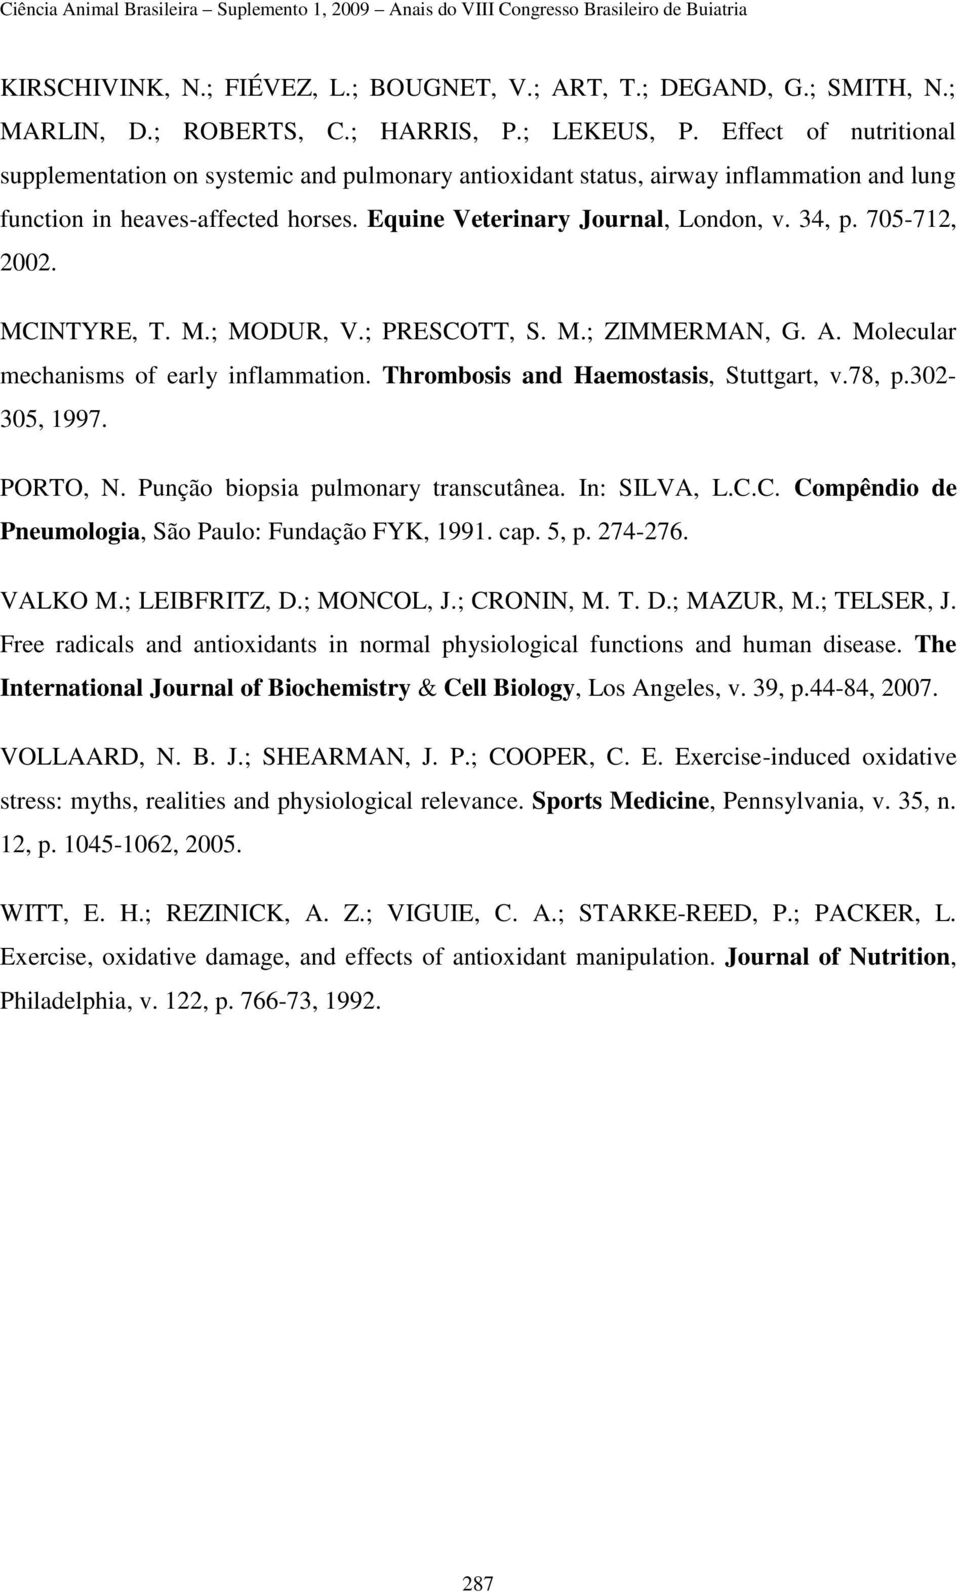 705-712, 2002. MCINTYRE, T. M.; MODUR, V.; PRESCOTT, S. M.; ZIMMERMAN, G. A. Molecular mechanisms of early inflammation. Thrombosis and Haemostasis, Stuttgart, v.78, p.302-305, 1997. PORTO, N.